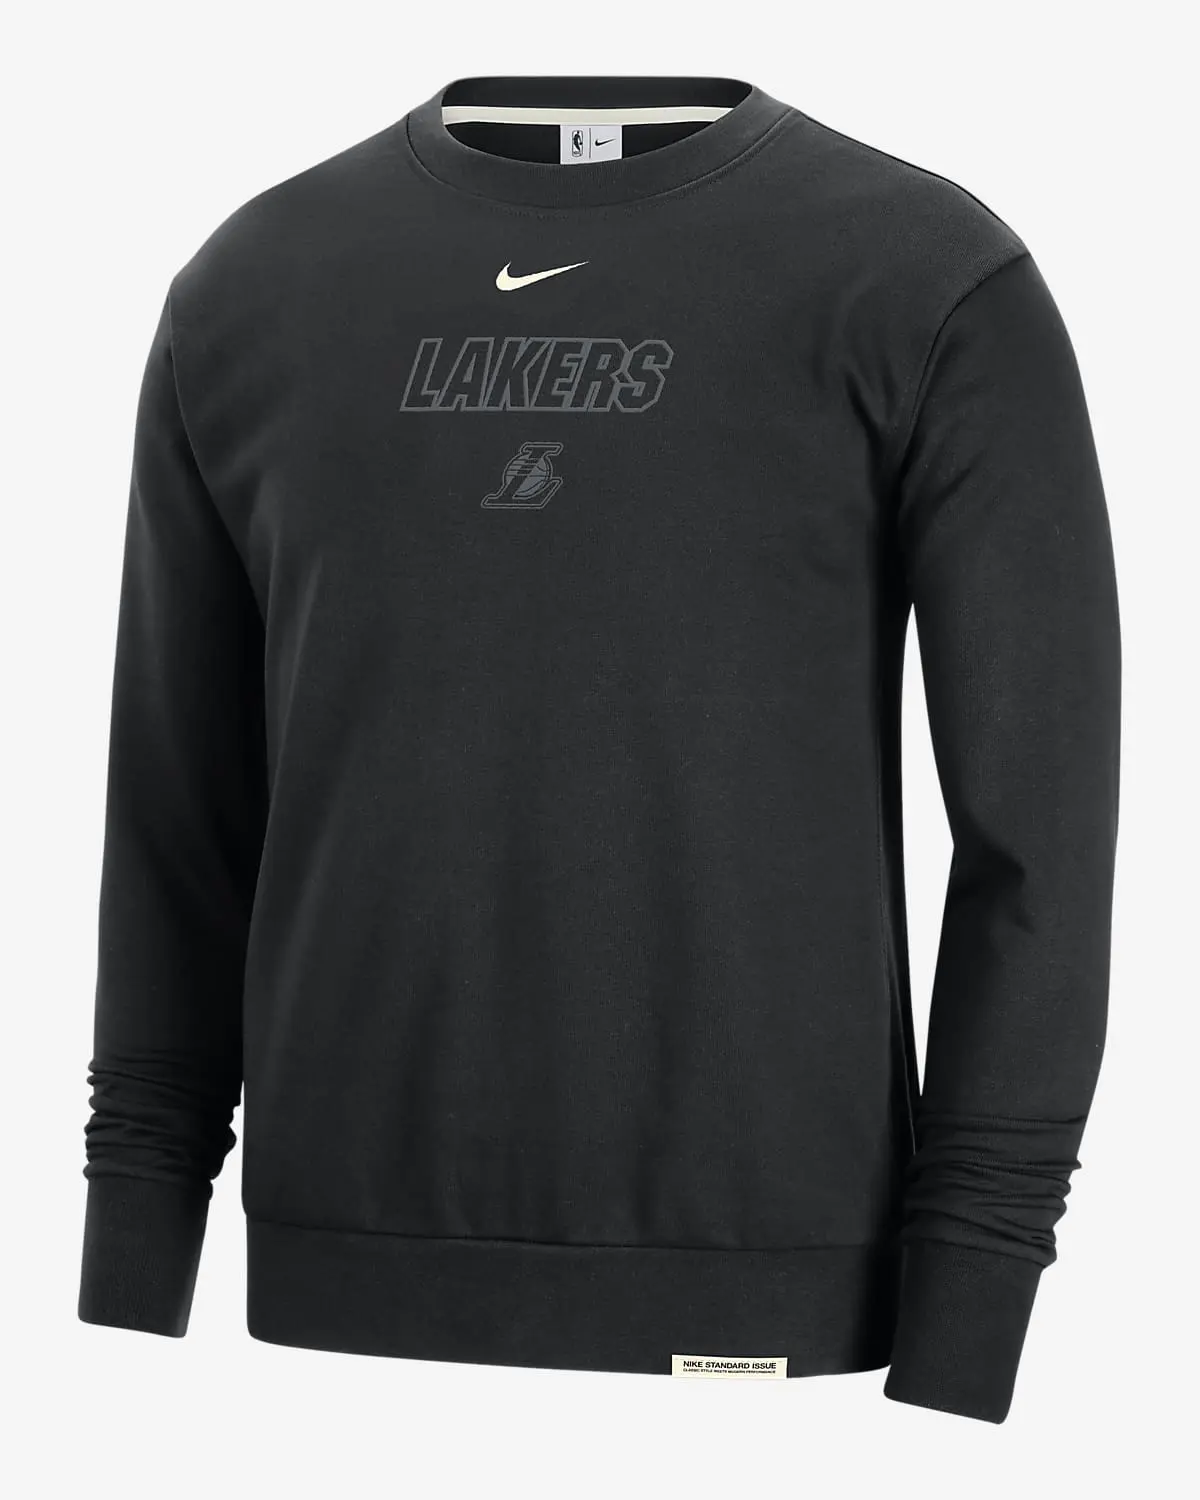 Nike Los Angeles Lakers Standard Issue. 1